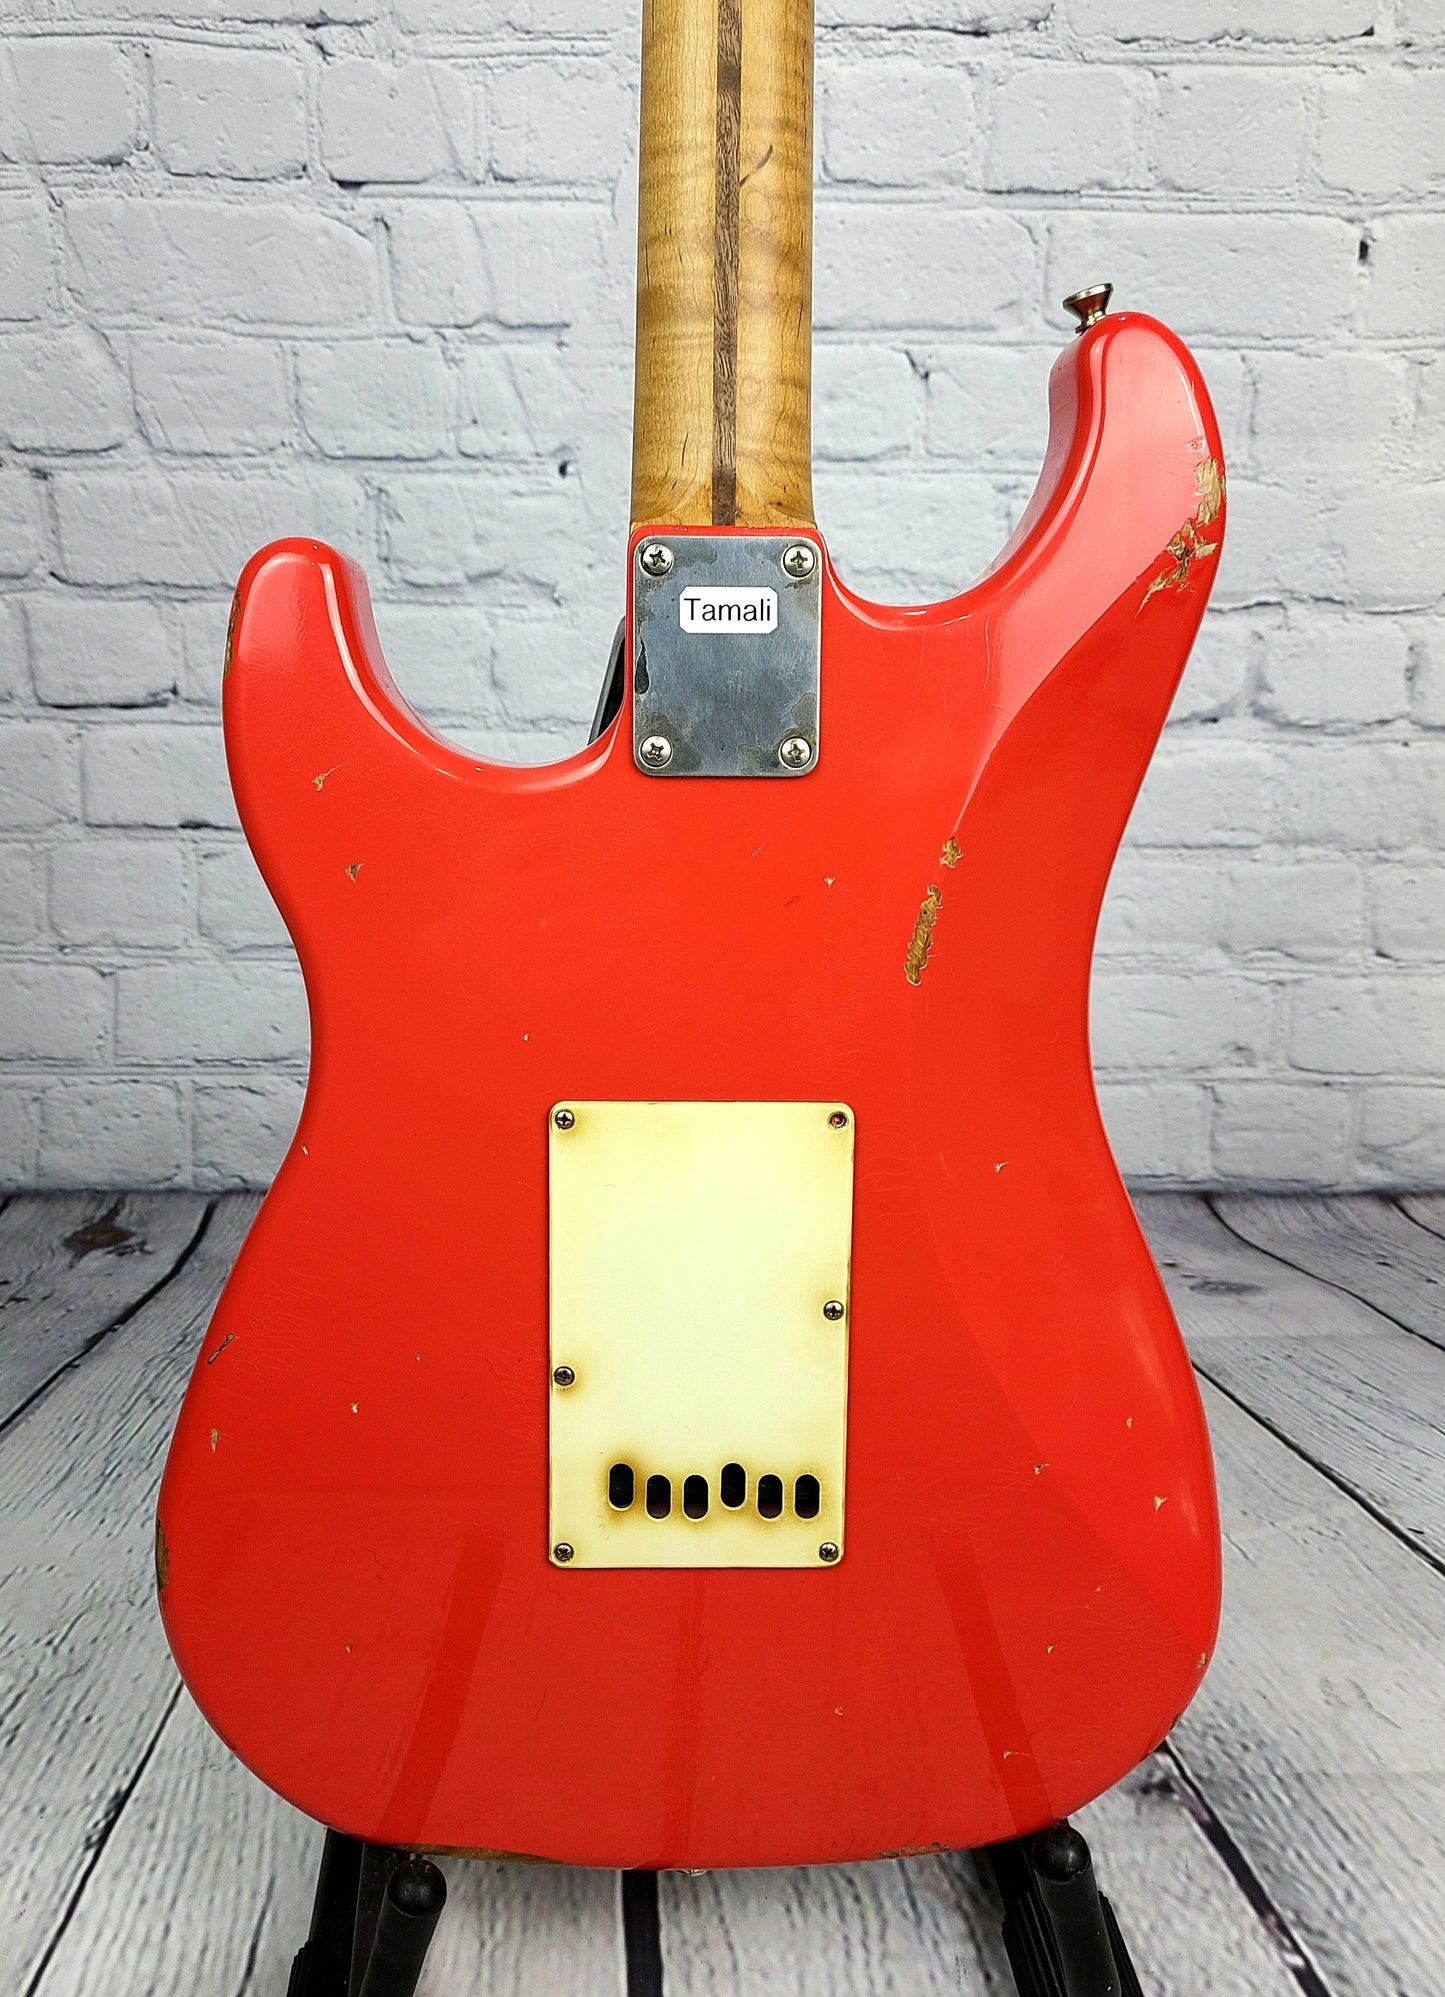 LsL Instruments Saticoy HSS NAMM 2021 Limited Roasted Run Fiesta Red "Tamali" - Guitar Brando